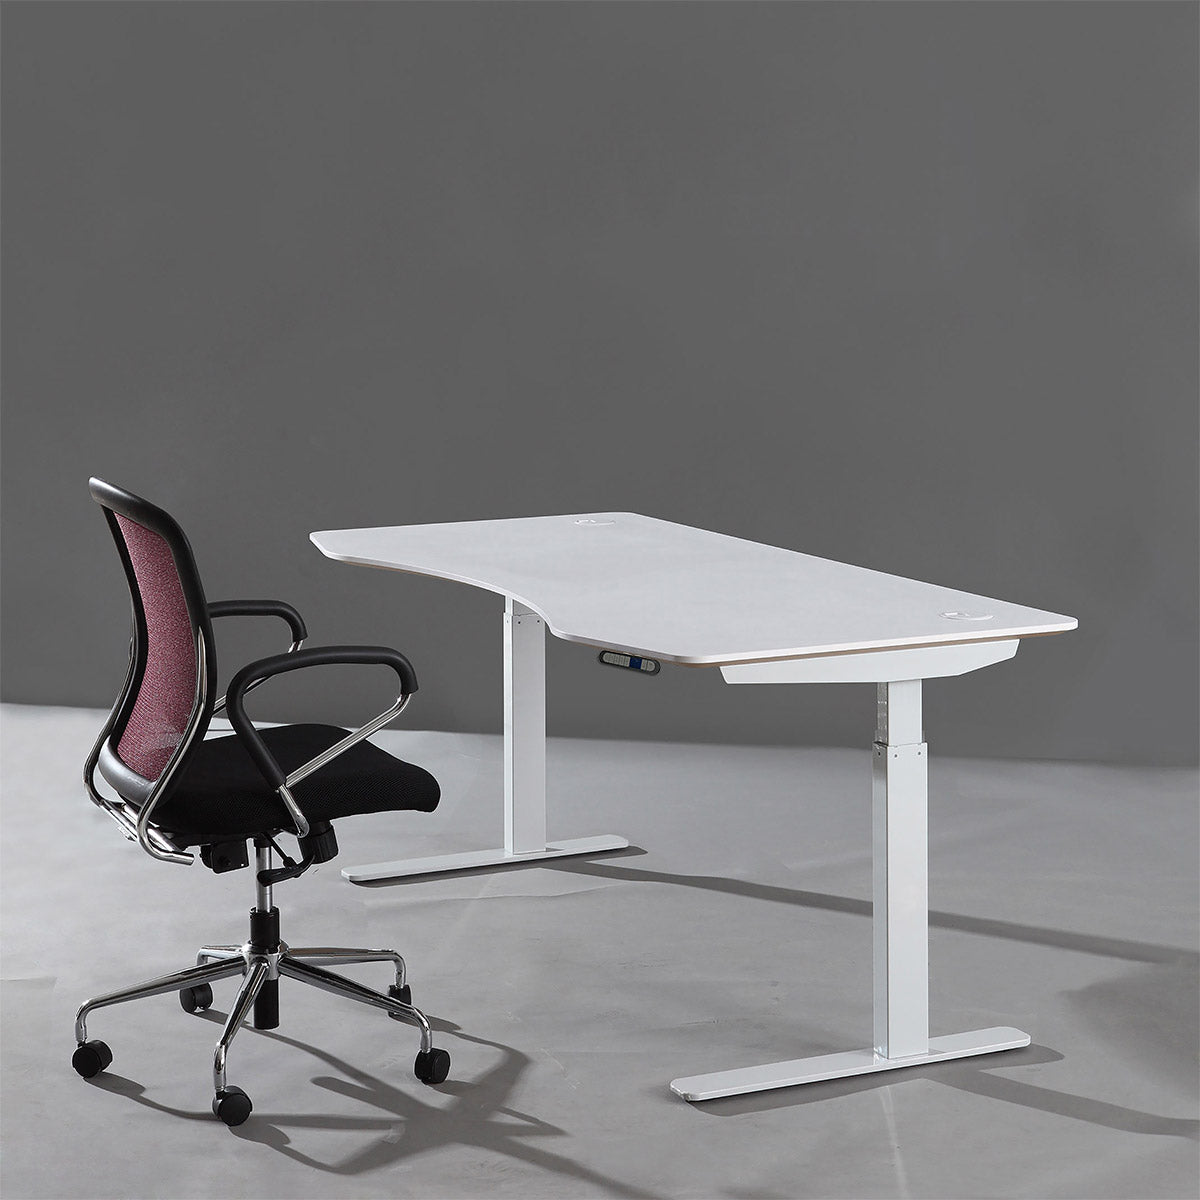 ApexDesk Elite Series 71” x 33” Height Adjustable Desk Image